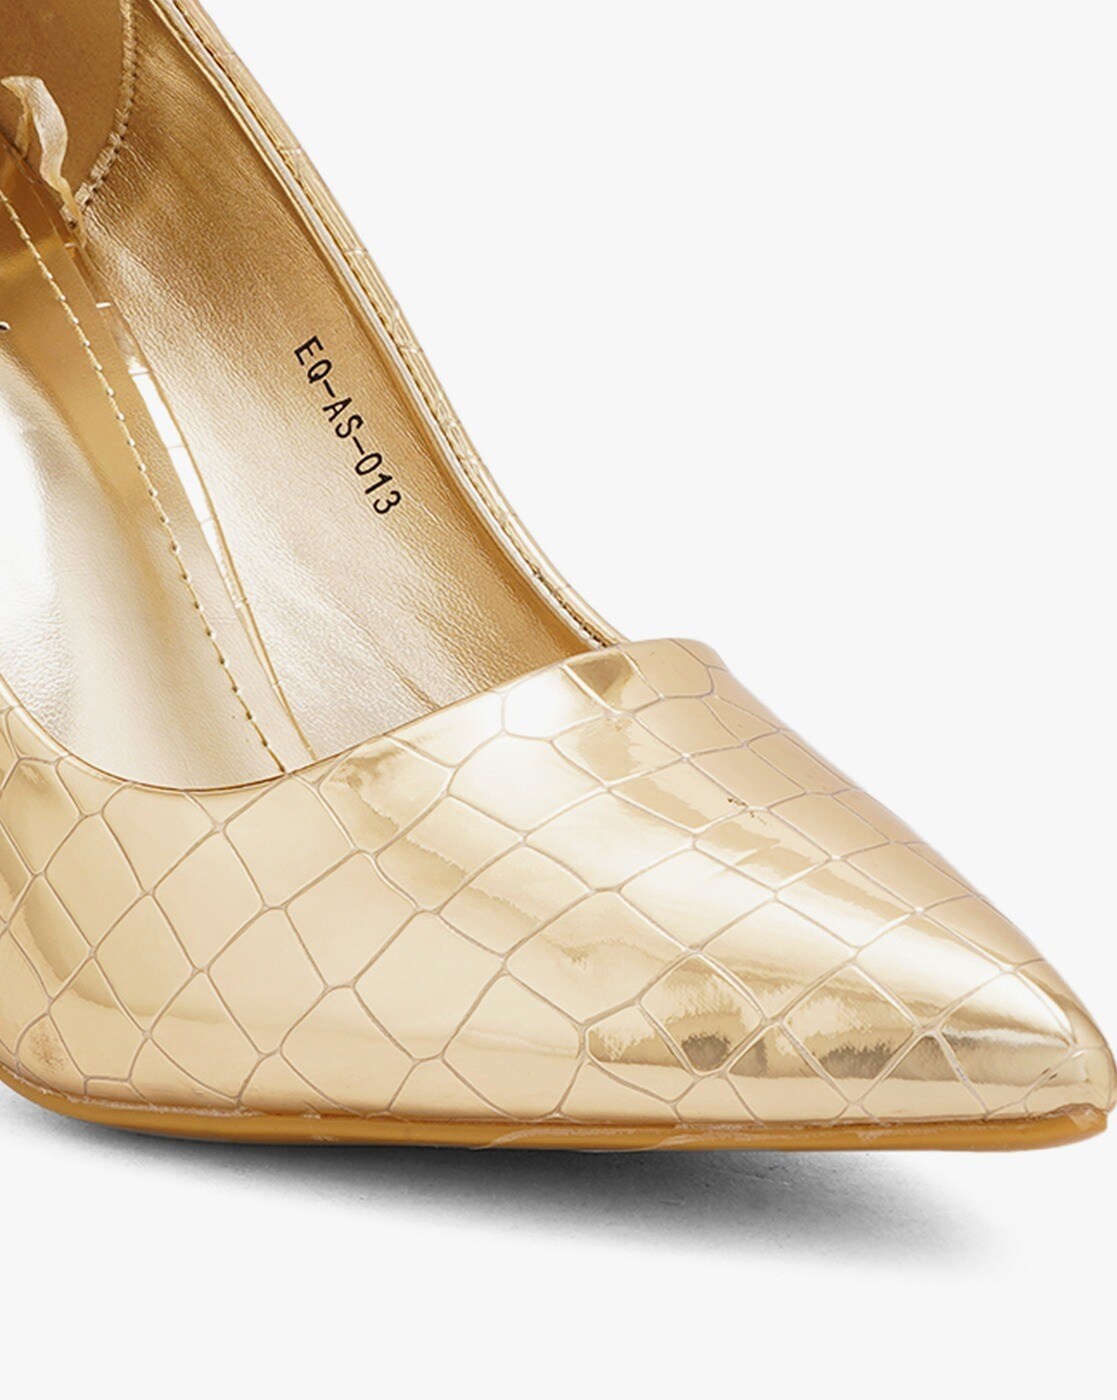 Croc Embossed Stiletto Court High Heel Pumps | Gold pumps heels, Pumps heels,  Heels